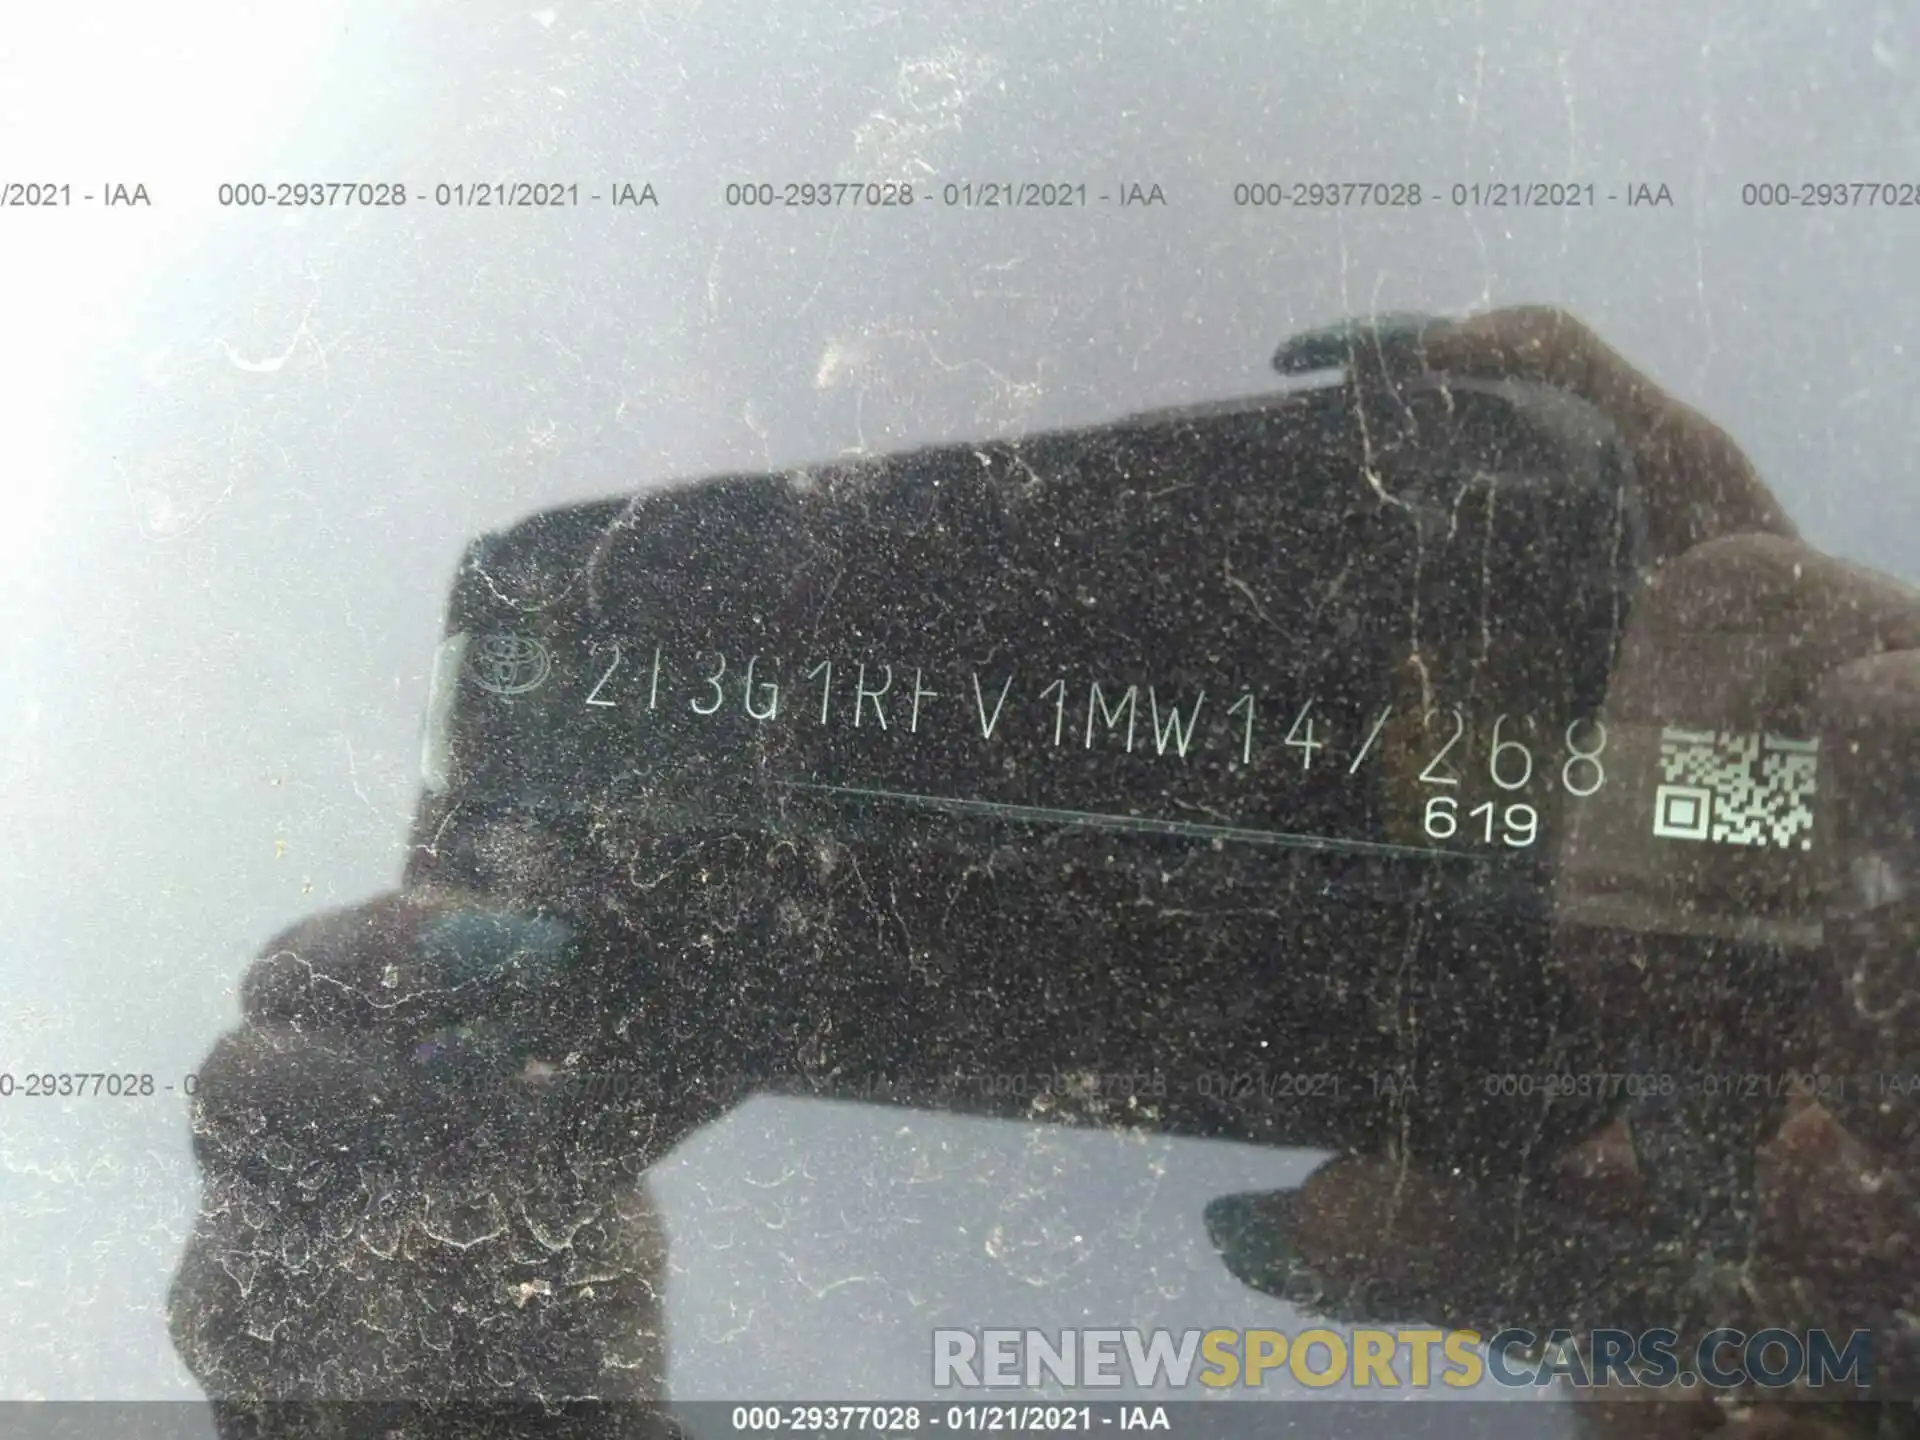 9 Photograph of a damaged car 2T3G1RFV1MW147268 TOYOTA RAV4 2021